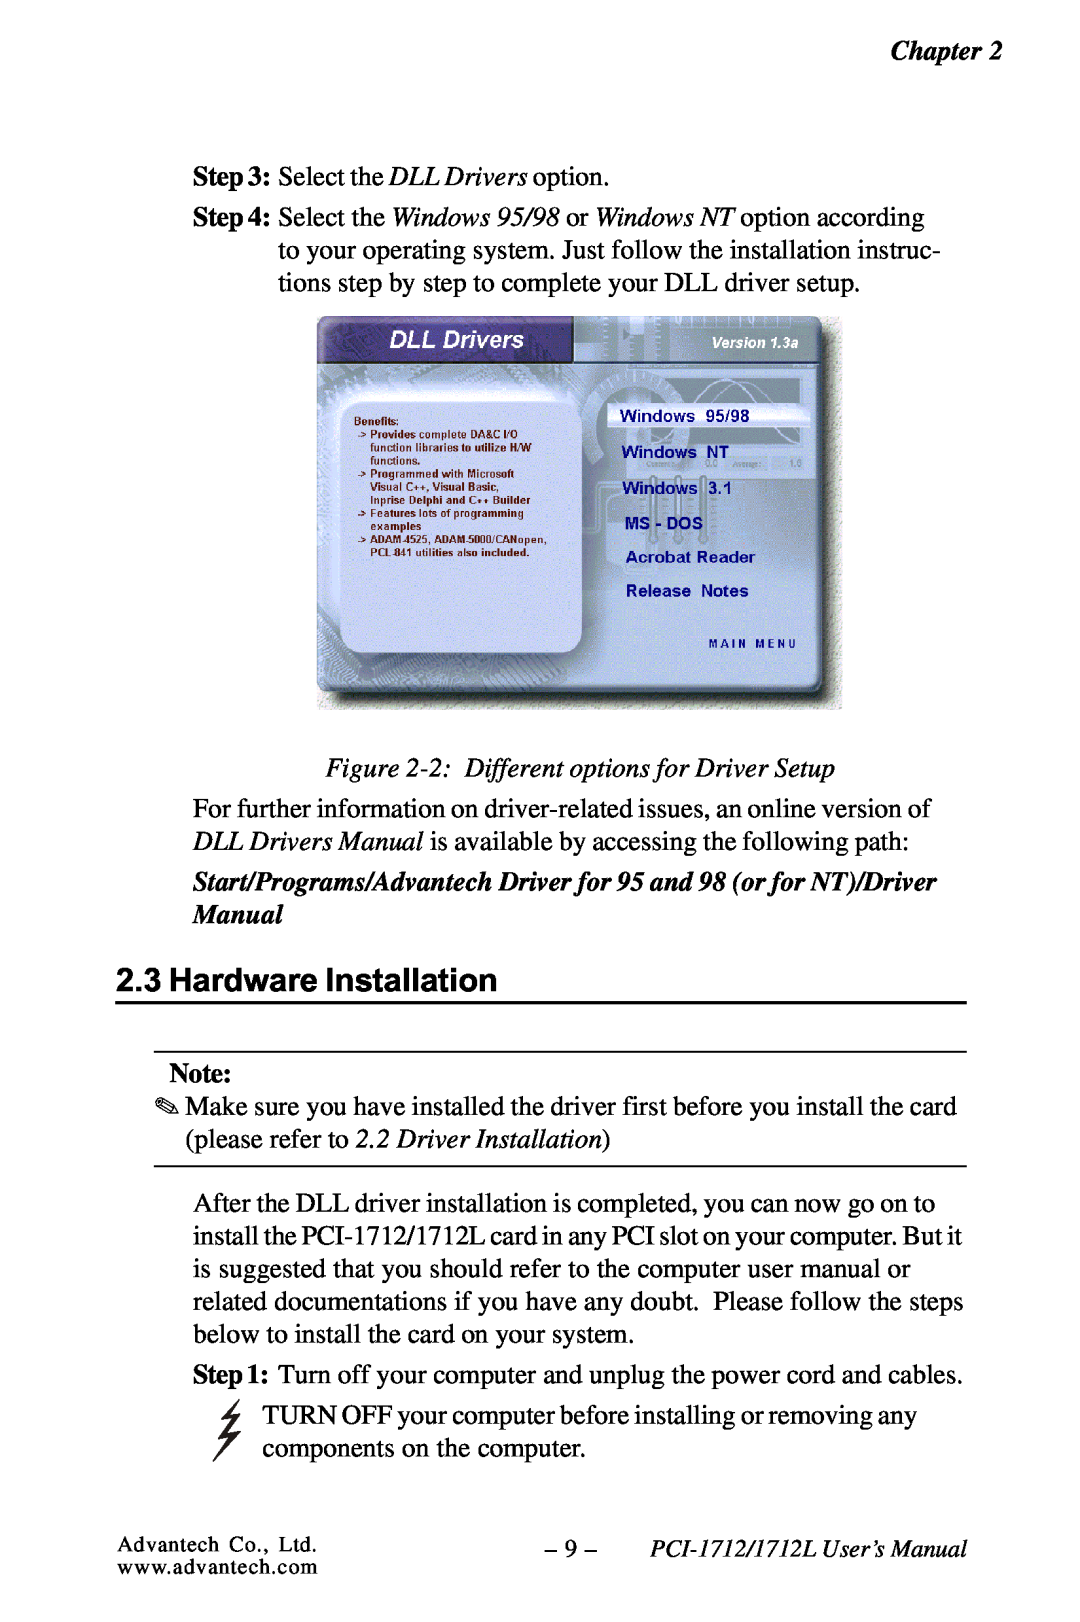 Konica Minolta PCI-1712L user manual Hardware Installation, 2 Different options for Driver Setup 